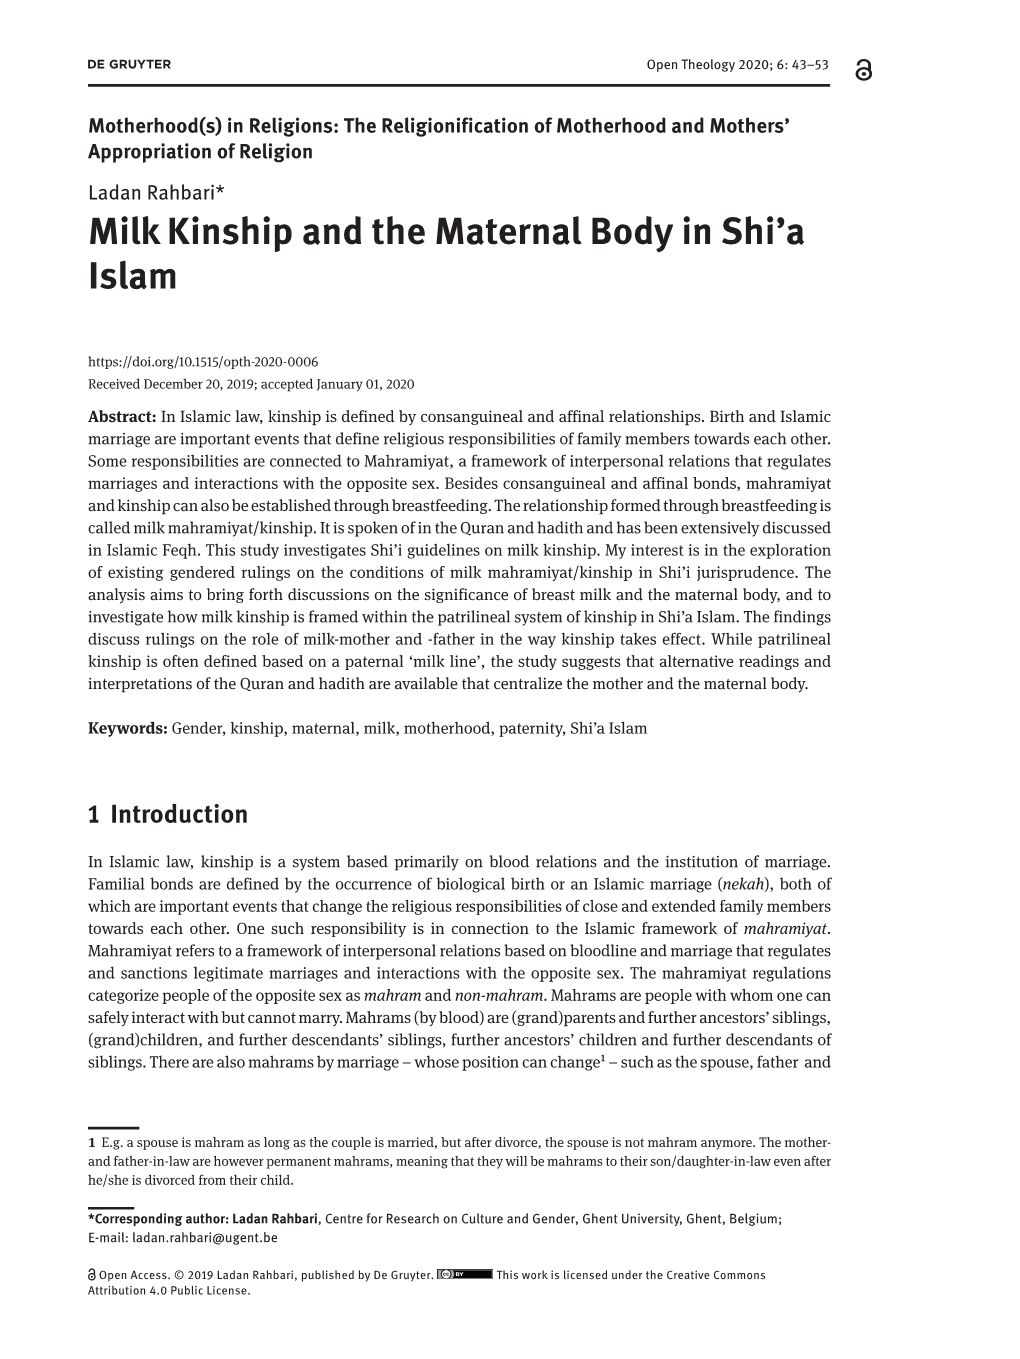 Milk Kinship and the Maternal Body in Shi'a Islam